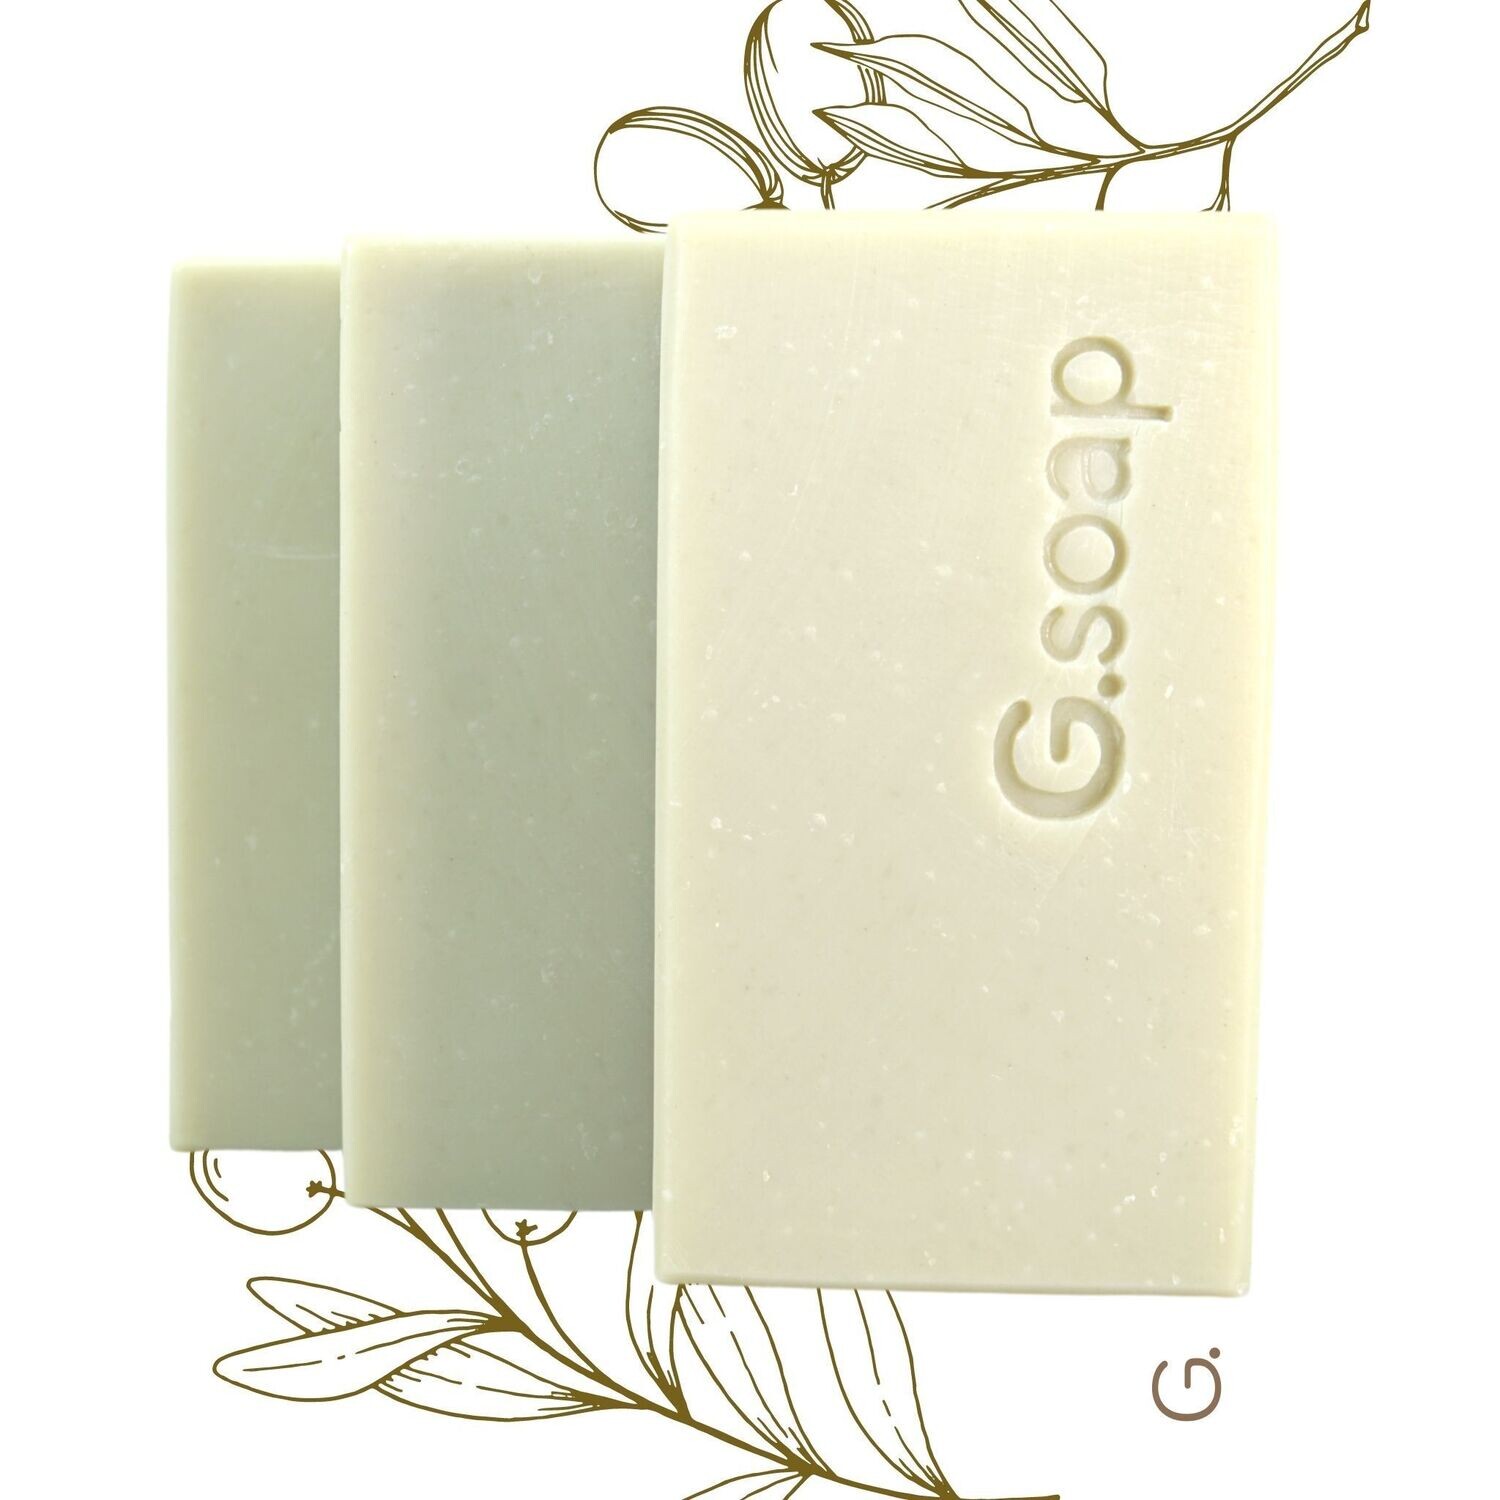 G.soap Soft Skin|Shea Butter & Olive Oil Moisturizing Soap Bar